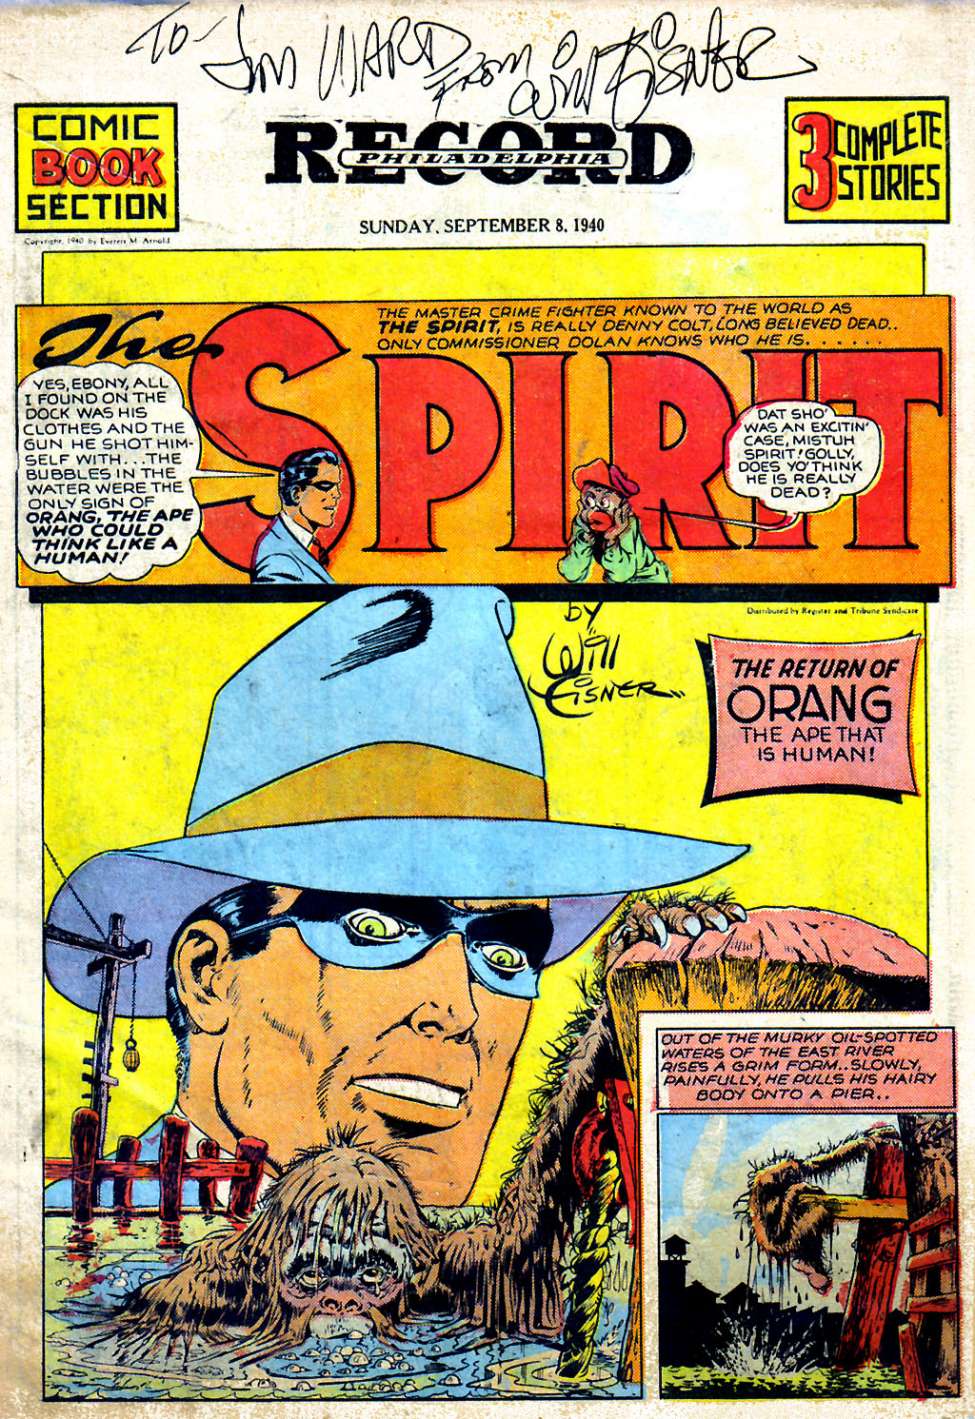 Comic Book Cover For The Spirit (1940-09-08) - Philadelphia Record